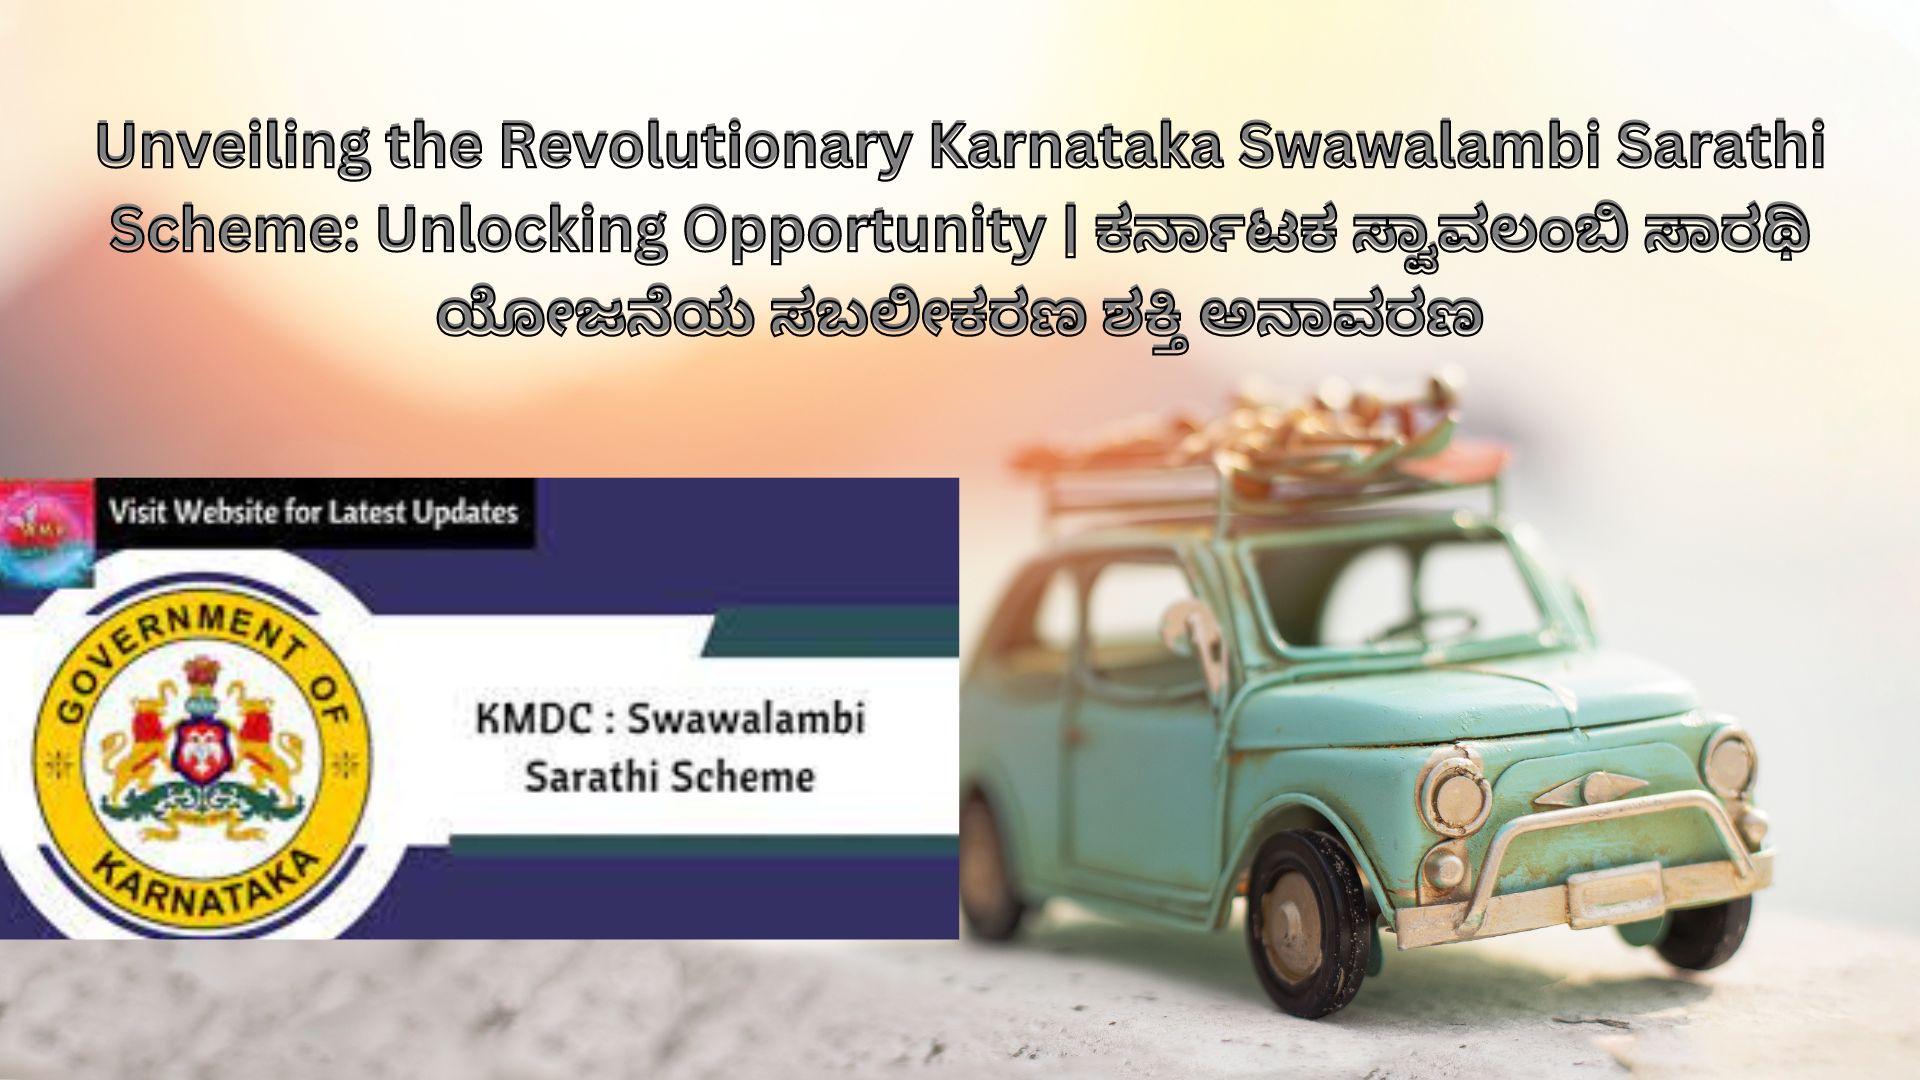 Unveiling the Revolutionary Karnataka Swawalambi Sarathi Scheme: Unlocking Opportunity | ಕರ್ನಾಟಕ ಸ್ವಾವಲಂಬಿ ಸಾರಥಿ ಯೋಜನೆಯ ಸಬಲೀಕರಣ ಶಕ್ತಿ ಅನಾವರಣ